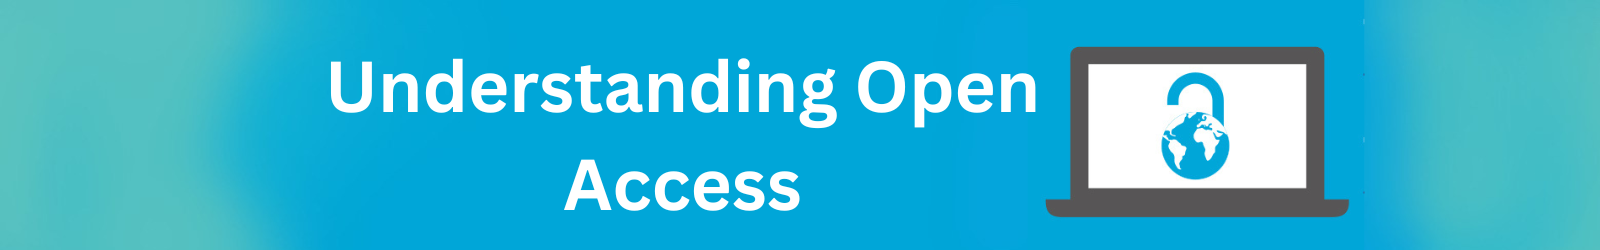 Understanding Open Access Banner